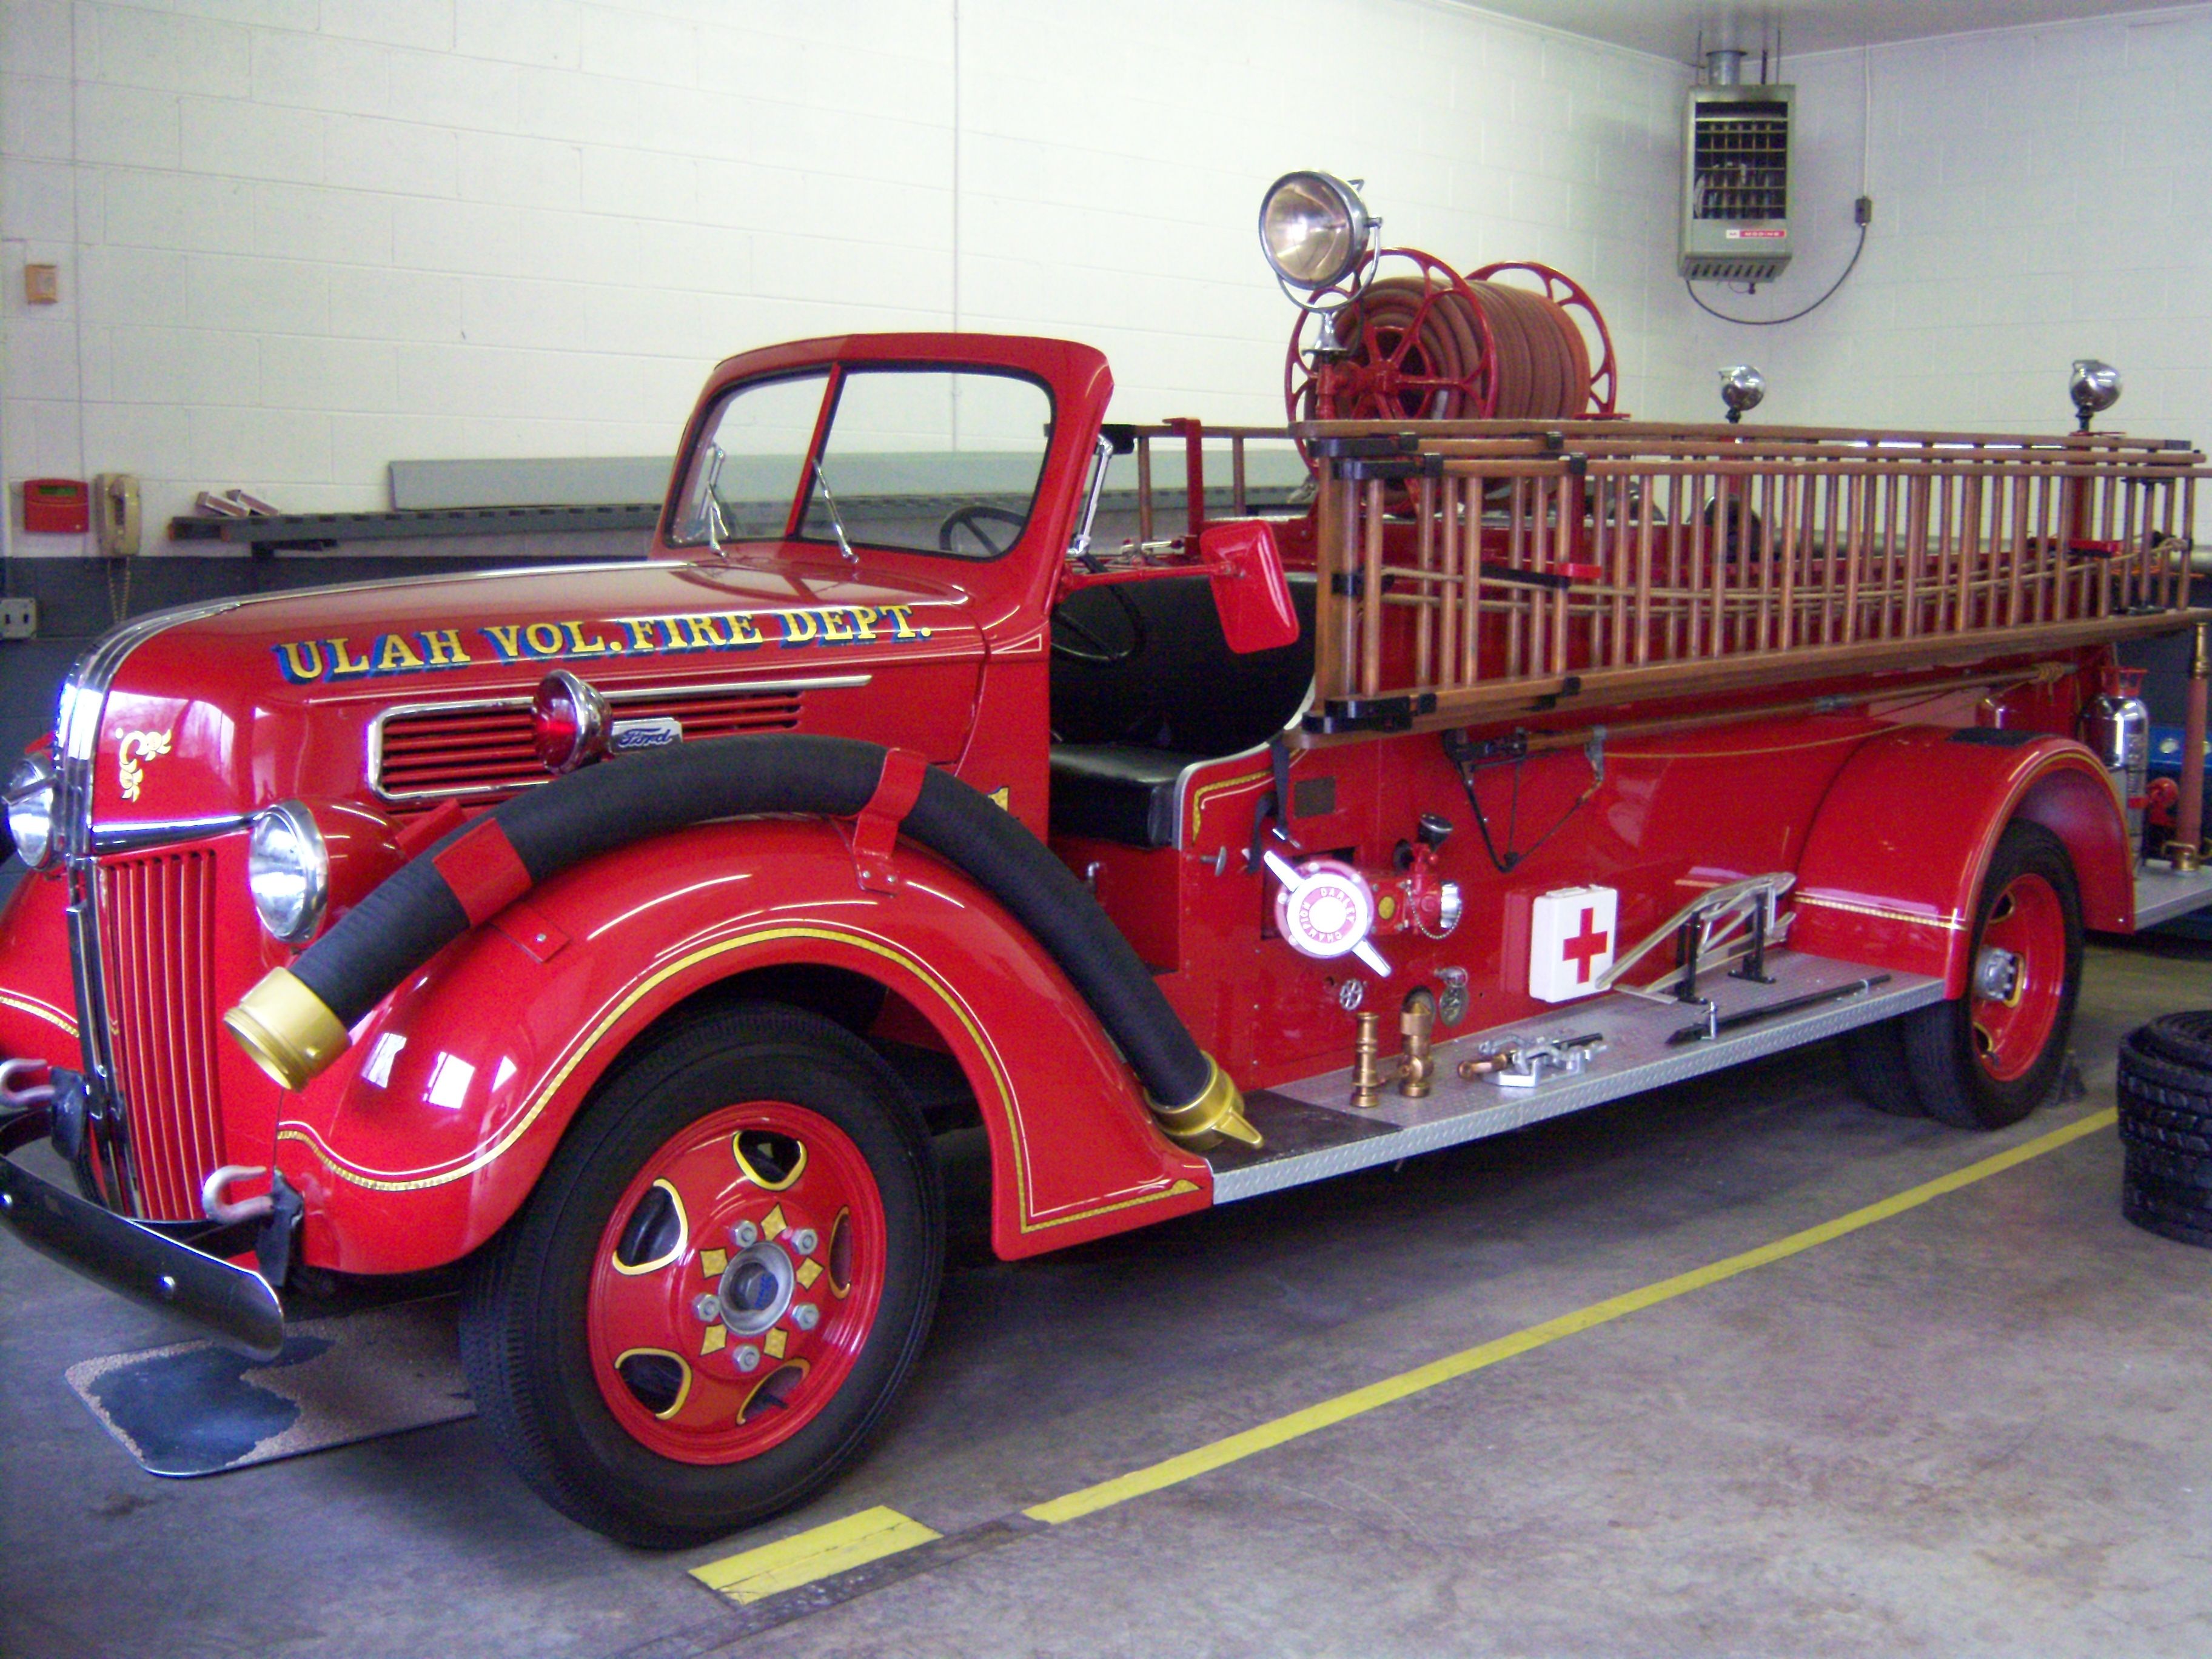 Old Fire Trucks | Old fire Truck - Fire Engineering Training ...